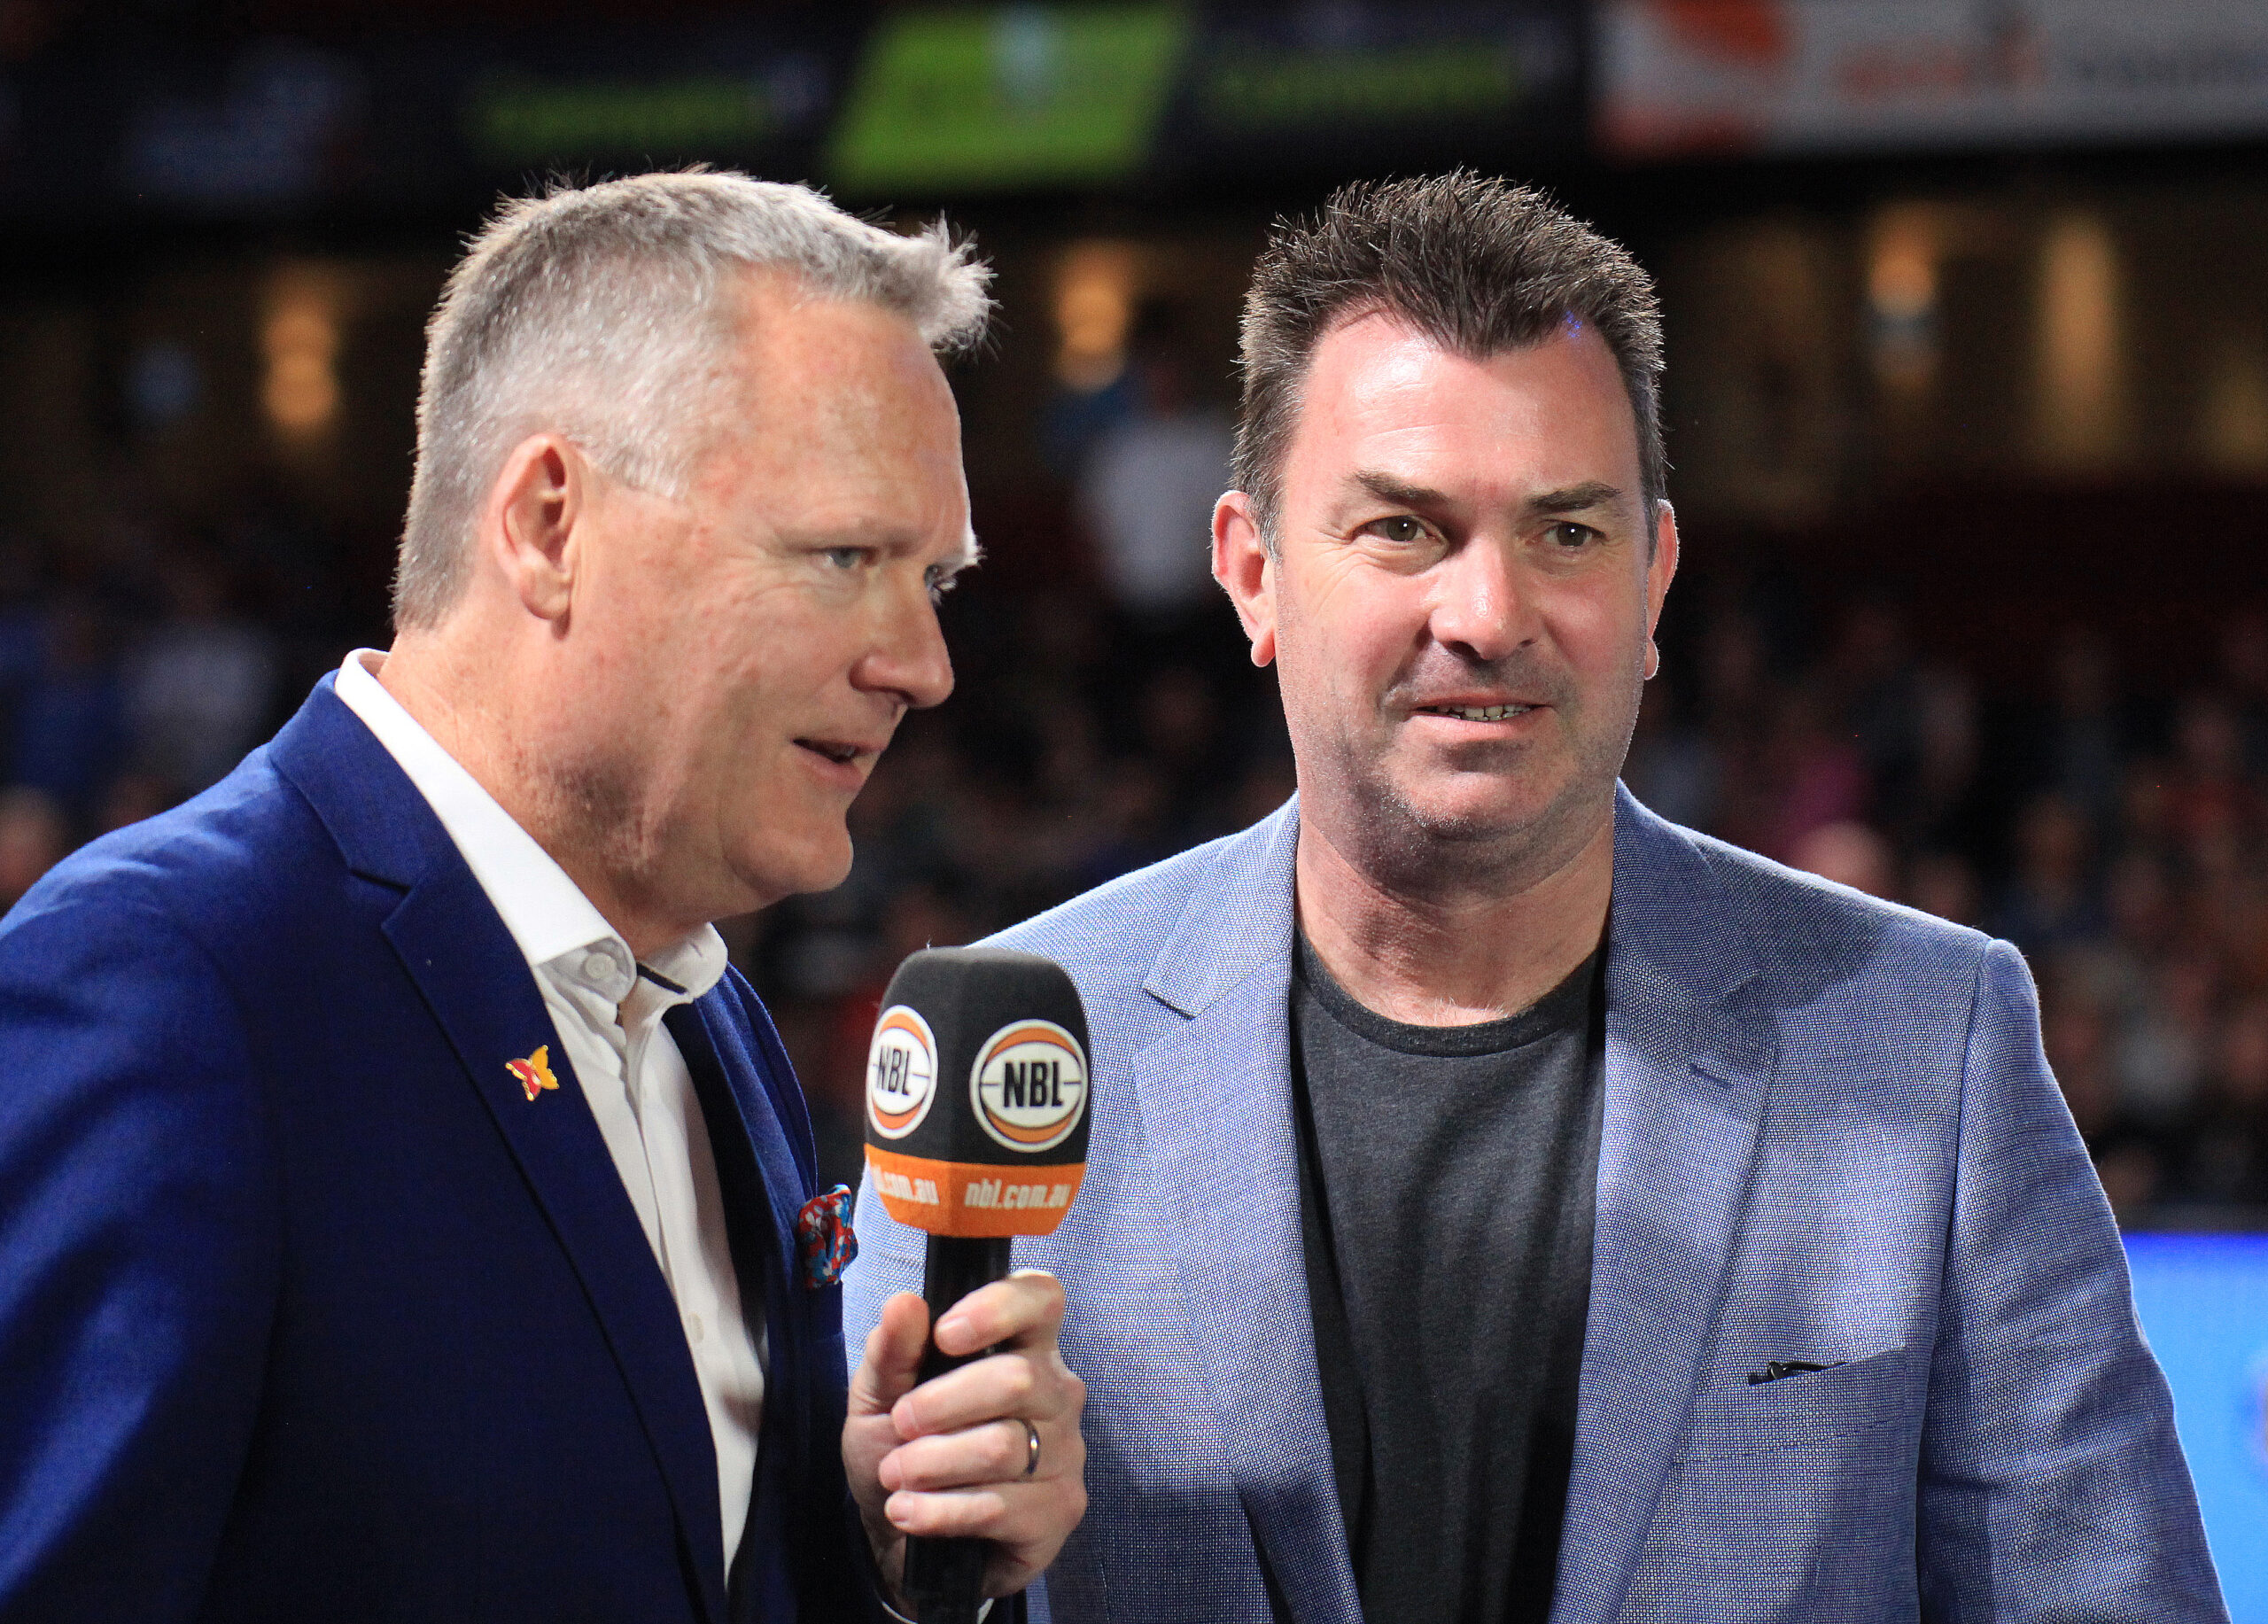 John casey interviewing current 36ers coach Scott Ninnis back in 2019